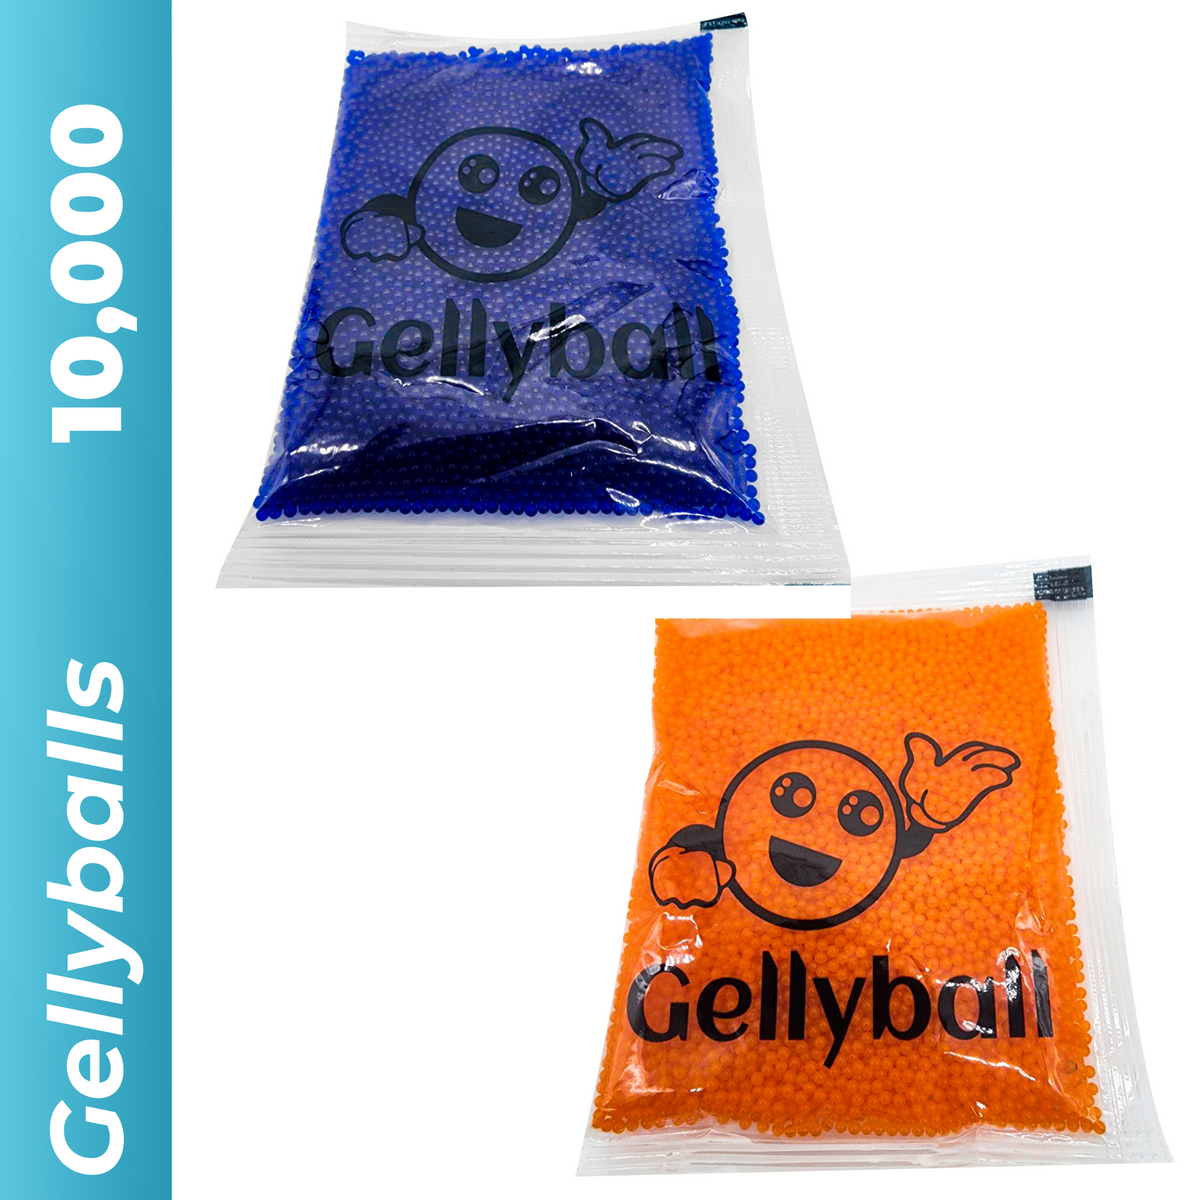 Gellyballs - 10,000 Pack | Dehydrated Gellyballs Ammo